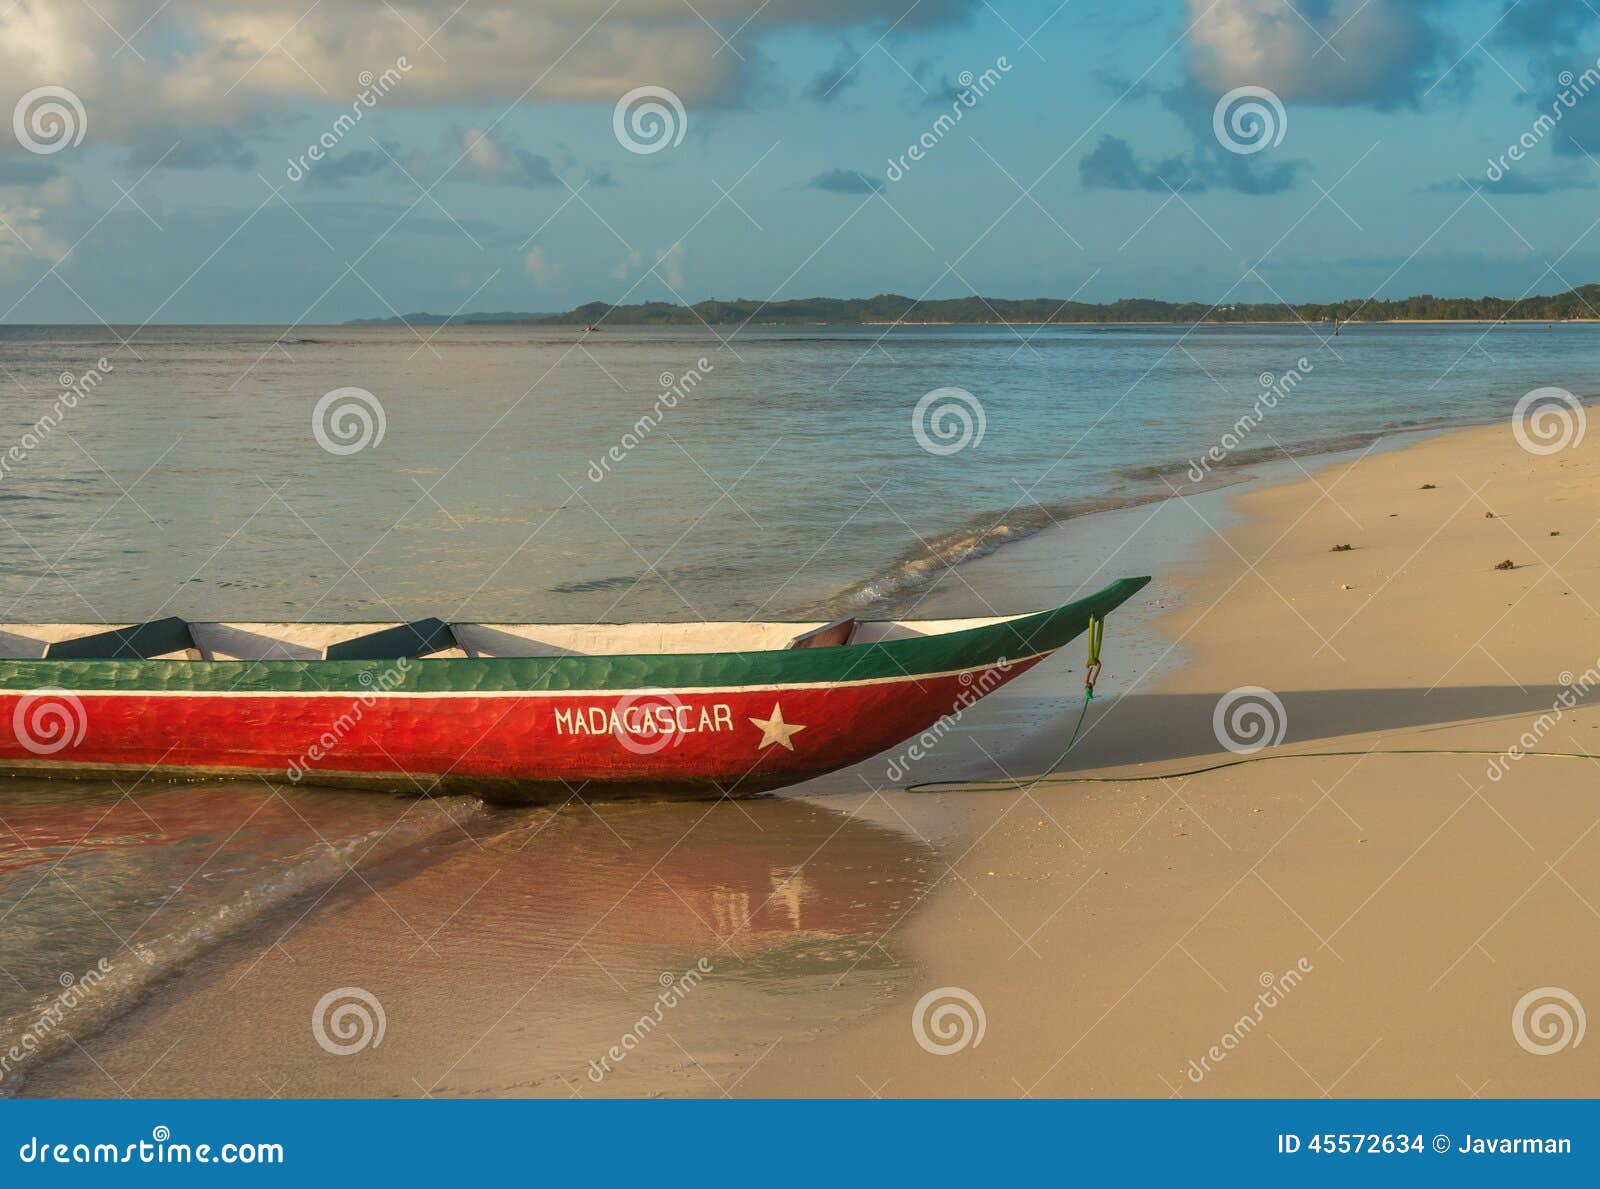 scenic boat on a sandy beach, madagascar holiday